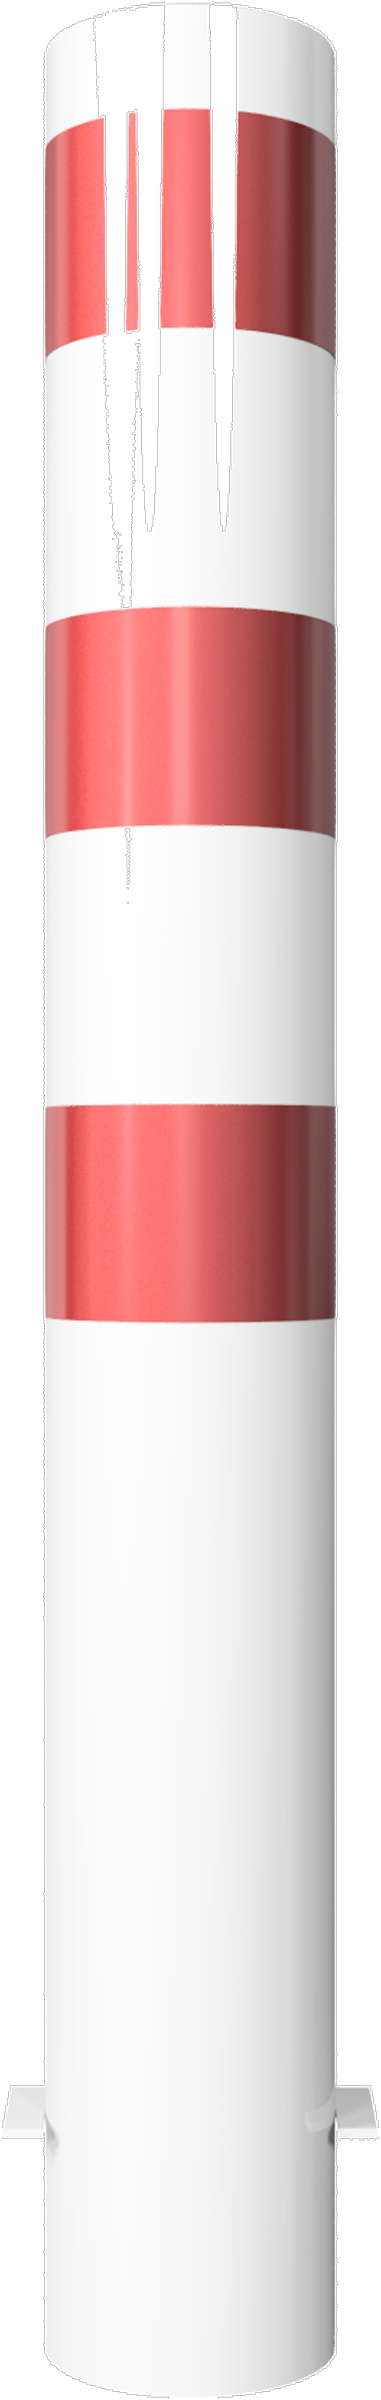 Schake Stahlrohrpoller OE Ø 152 mm weiß | rot - 1,20 m